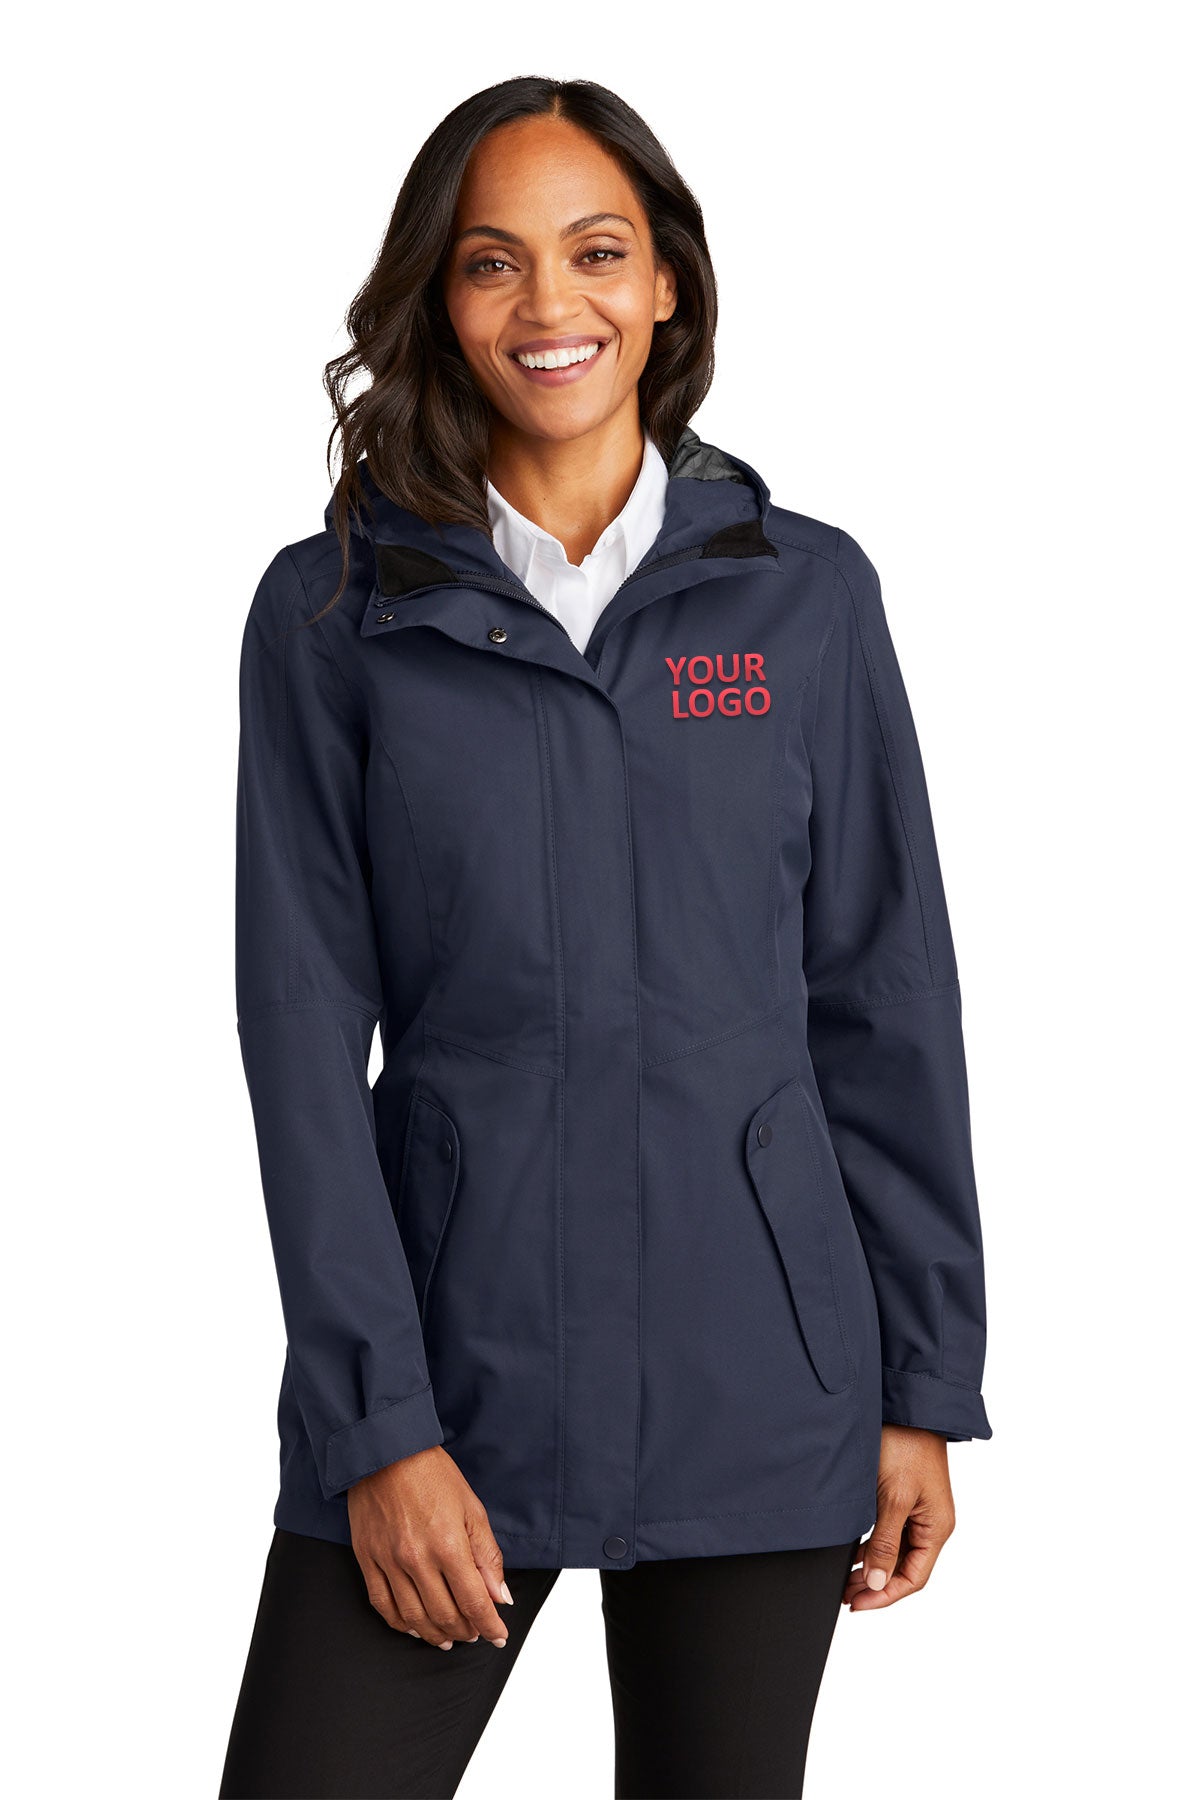 Port Authority River Blue Navy L900 company jackets with logo